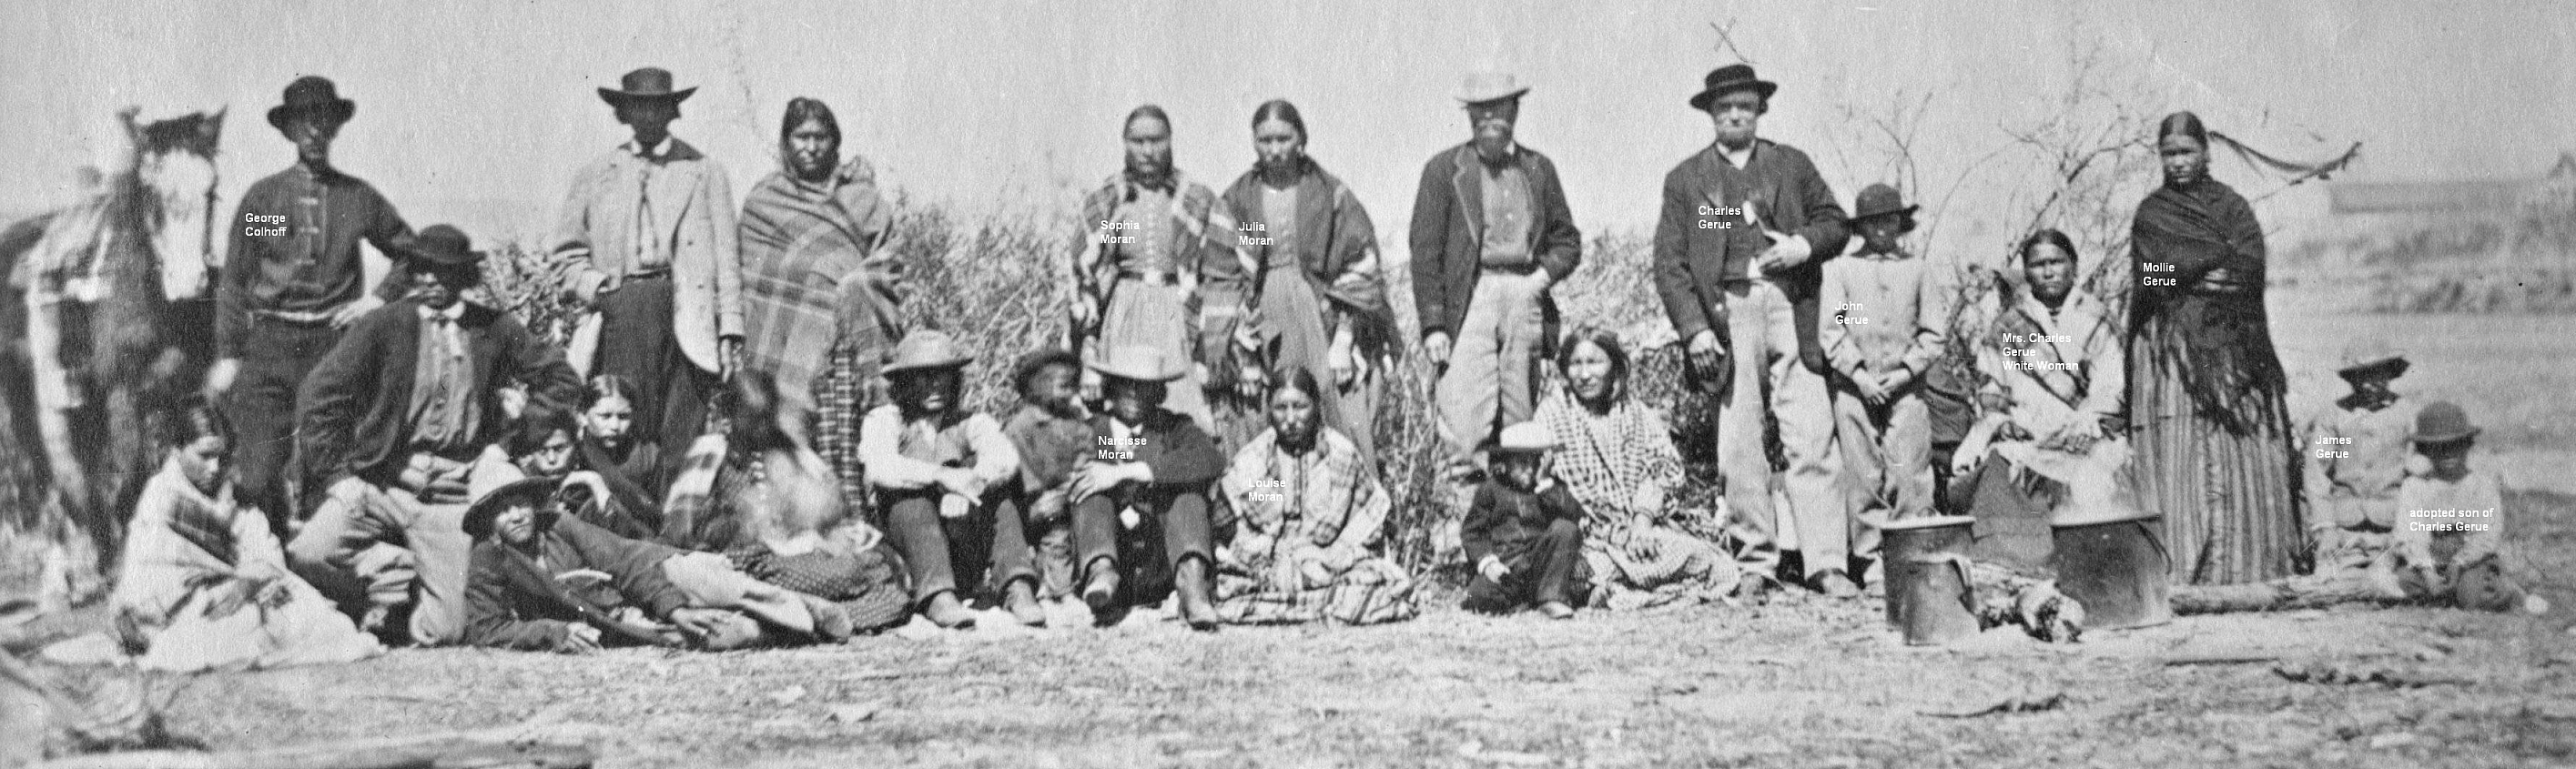 http://www.american-tribes.com/messageboards/dietmar/1868gardner3.jpg